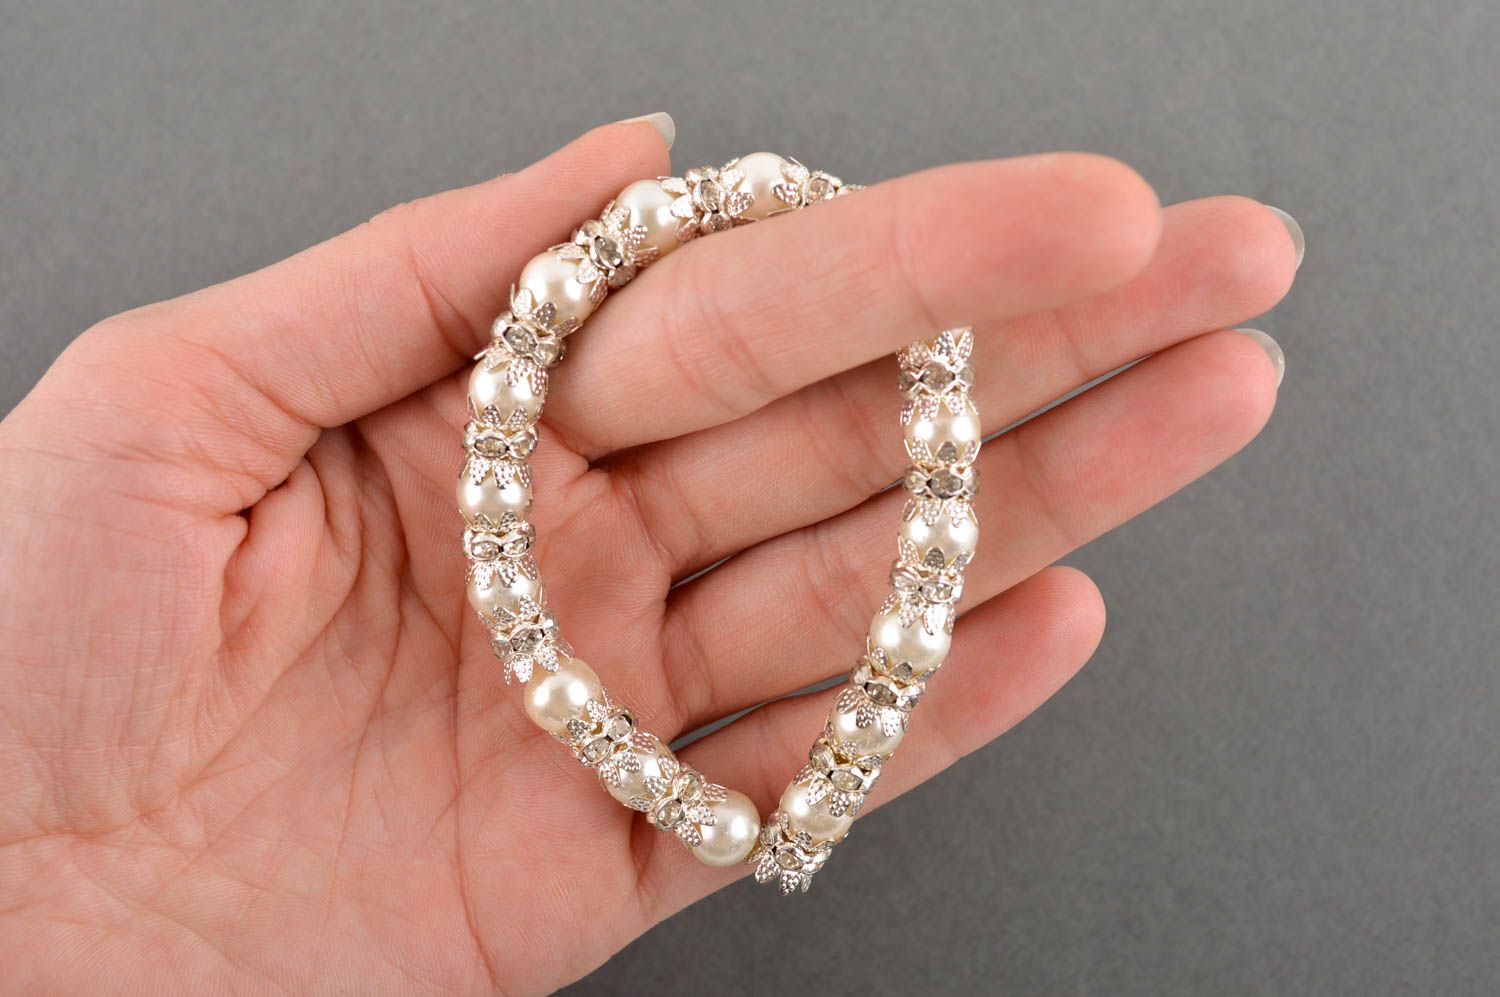 Pearl bracelet handmade jewelry wrist bracelet designer accessories gift for her photo 5